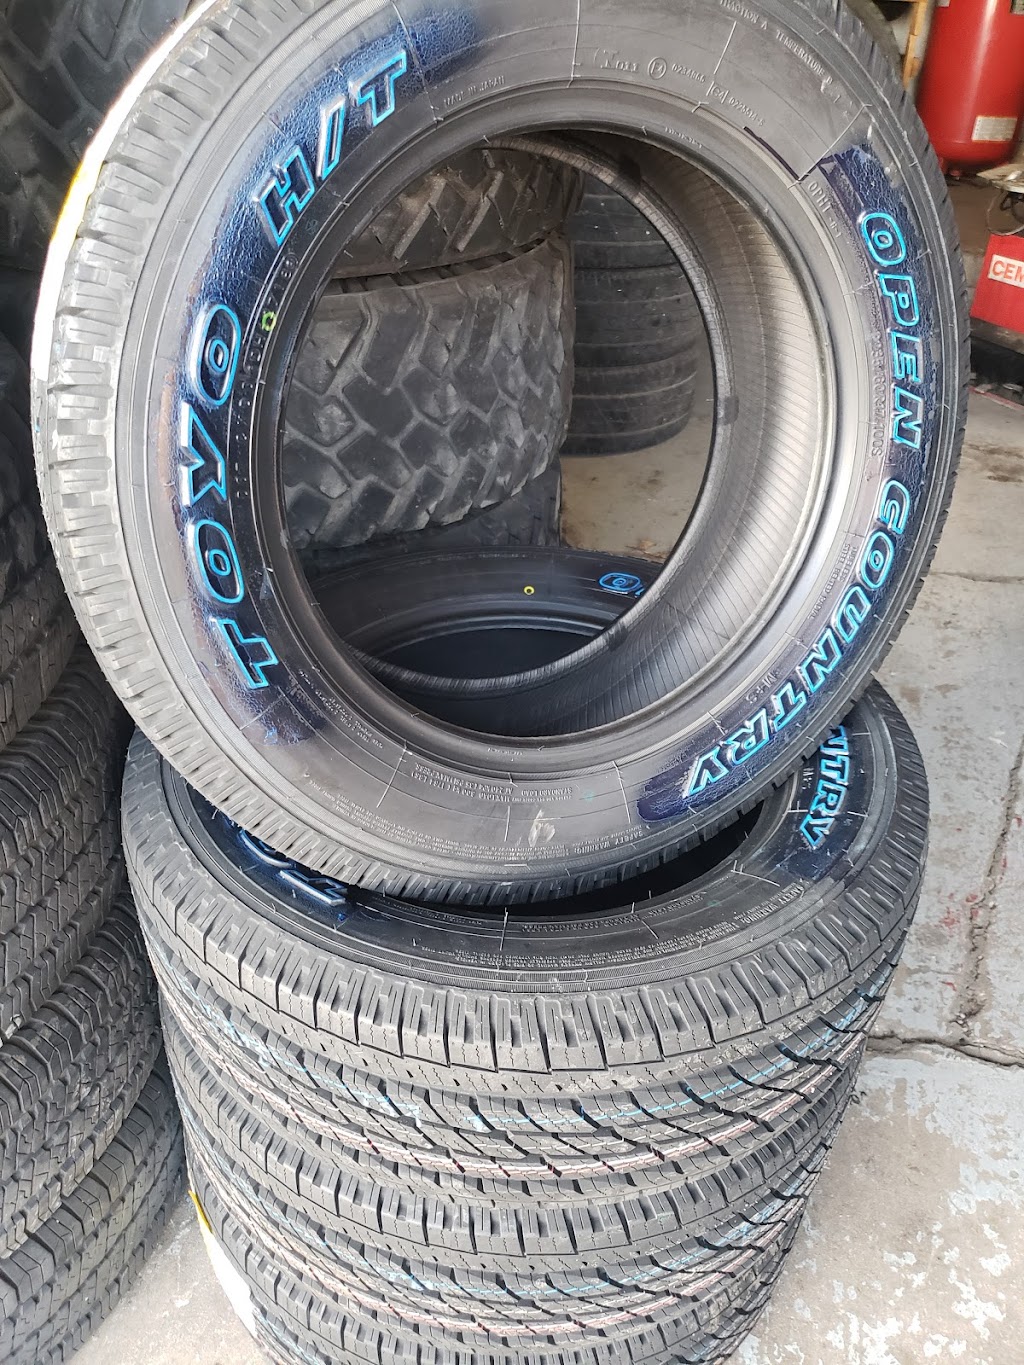 Victors tire service | 1450 I-35, New Braunfels, TX 78130, USA | Phone: (830) 500-3770